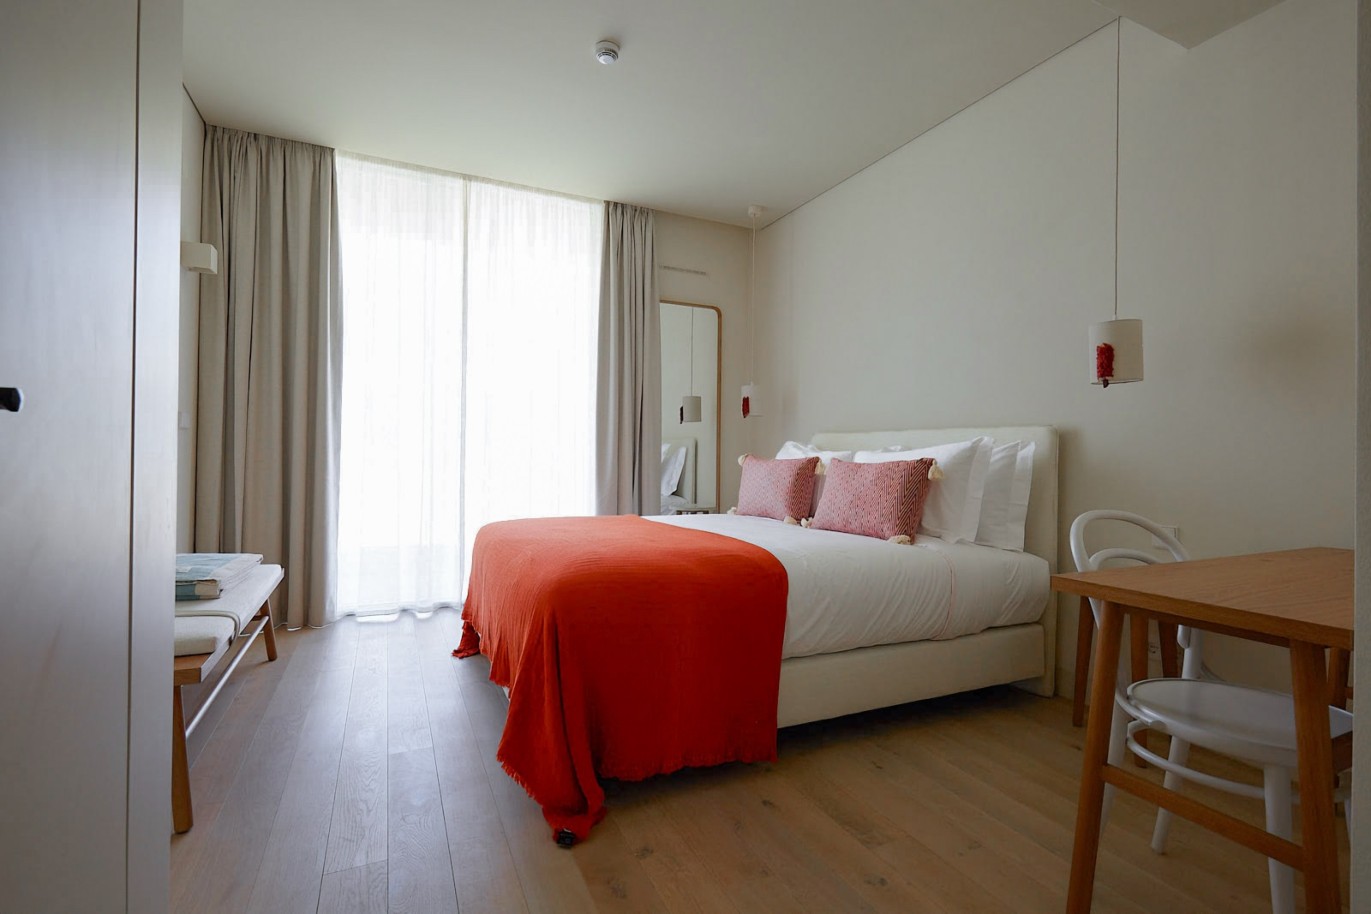 2 bedroom apartment in resort, for sale in Porches, Algarve_228828